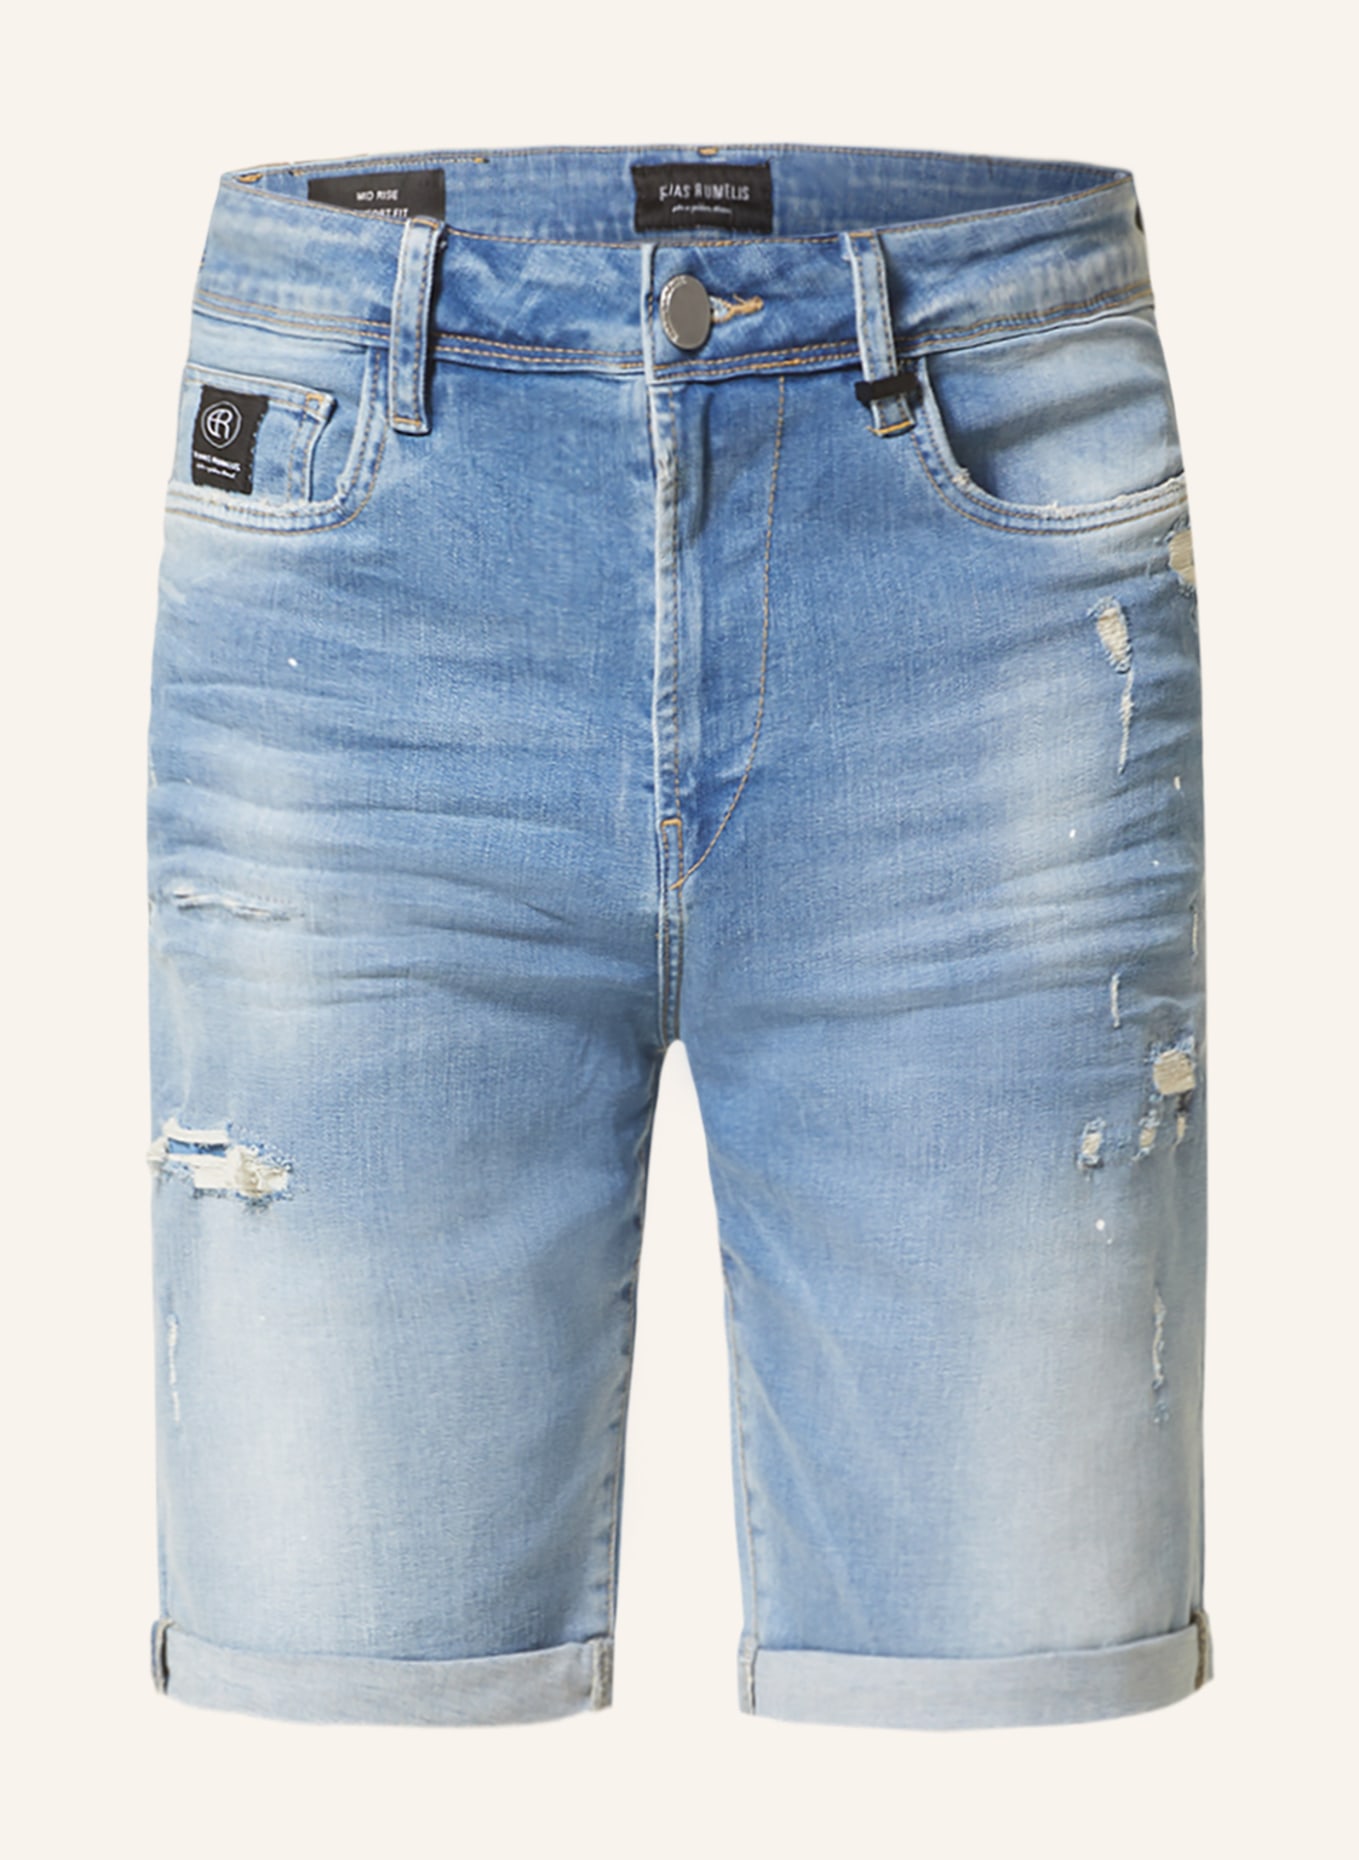 ELIAS RUMELIS Jeansshorts ERLAURIN Comfort Fit, Farbe: 568 berry blue (Bild 1)